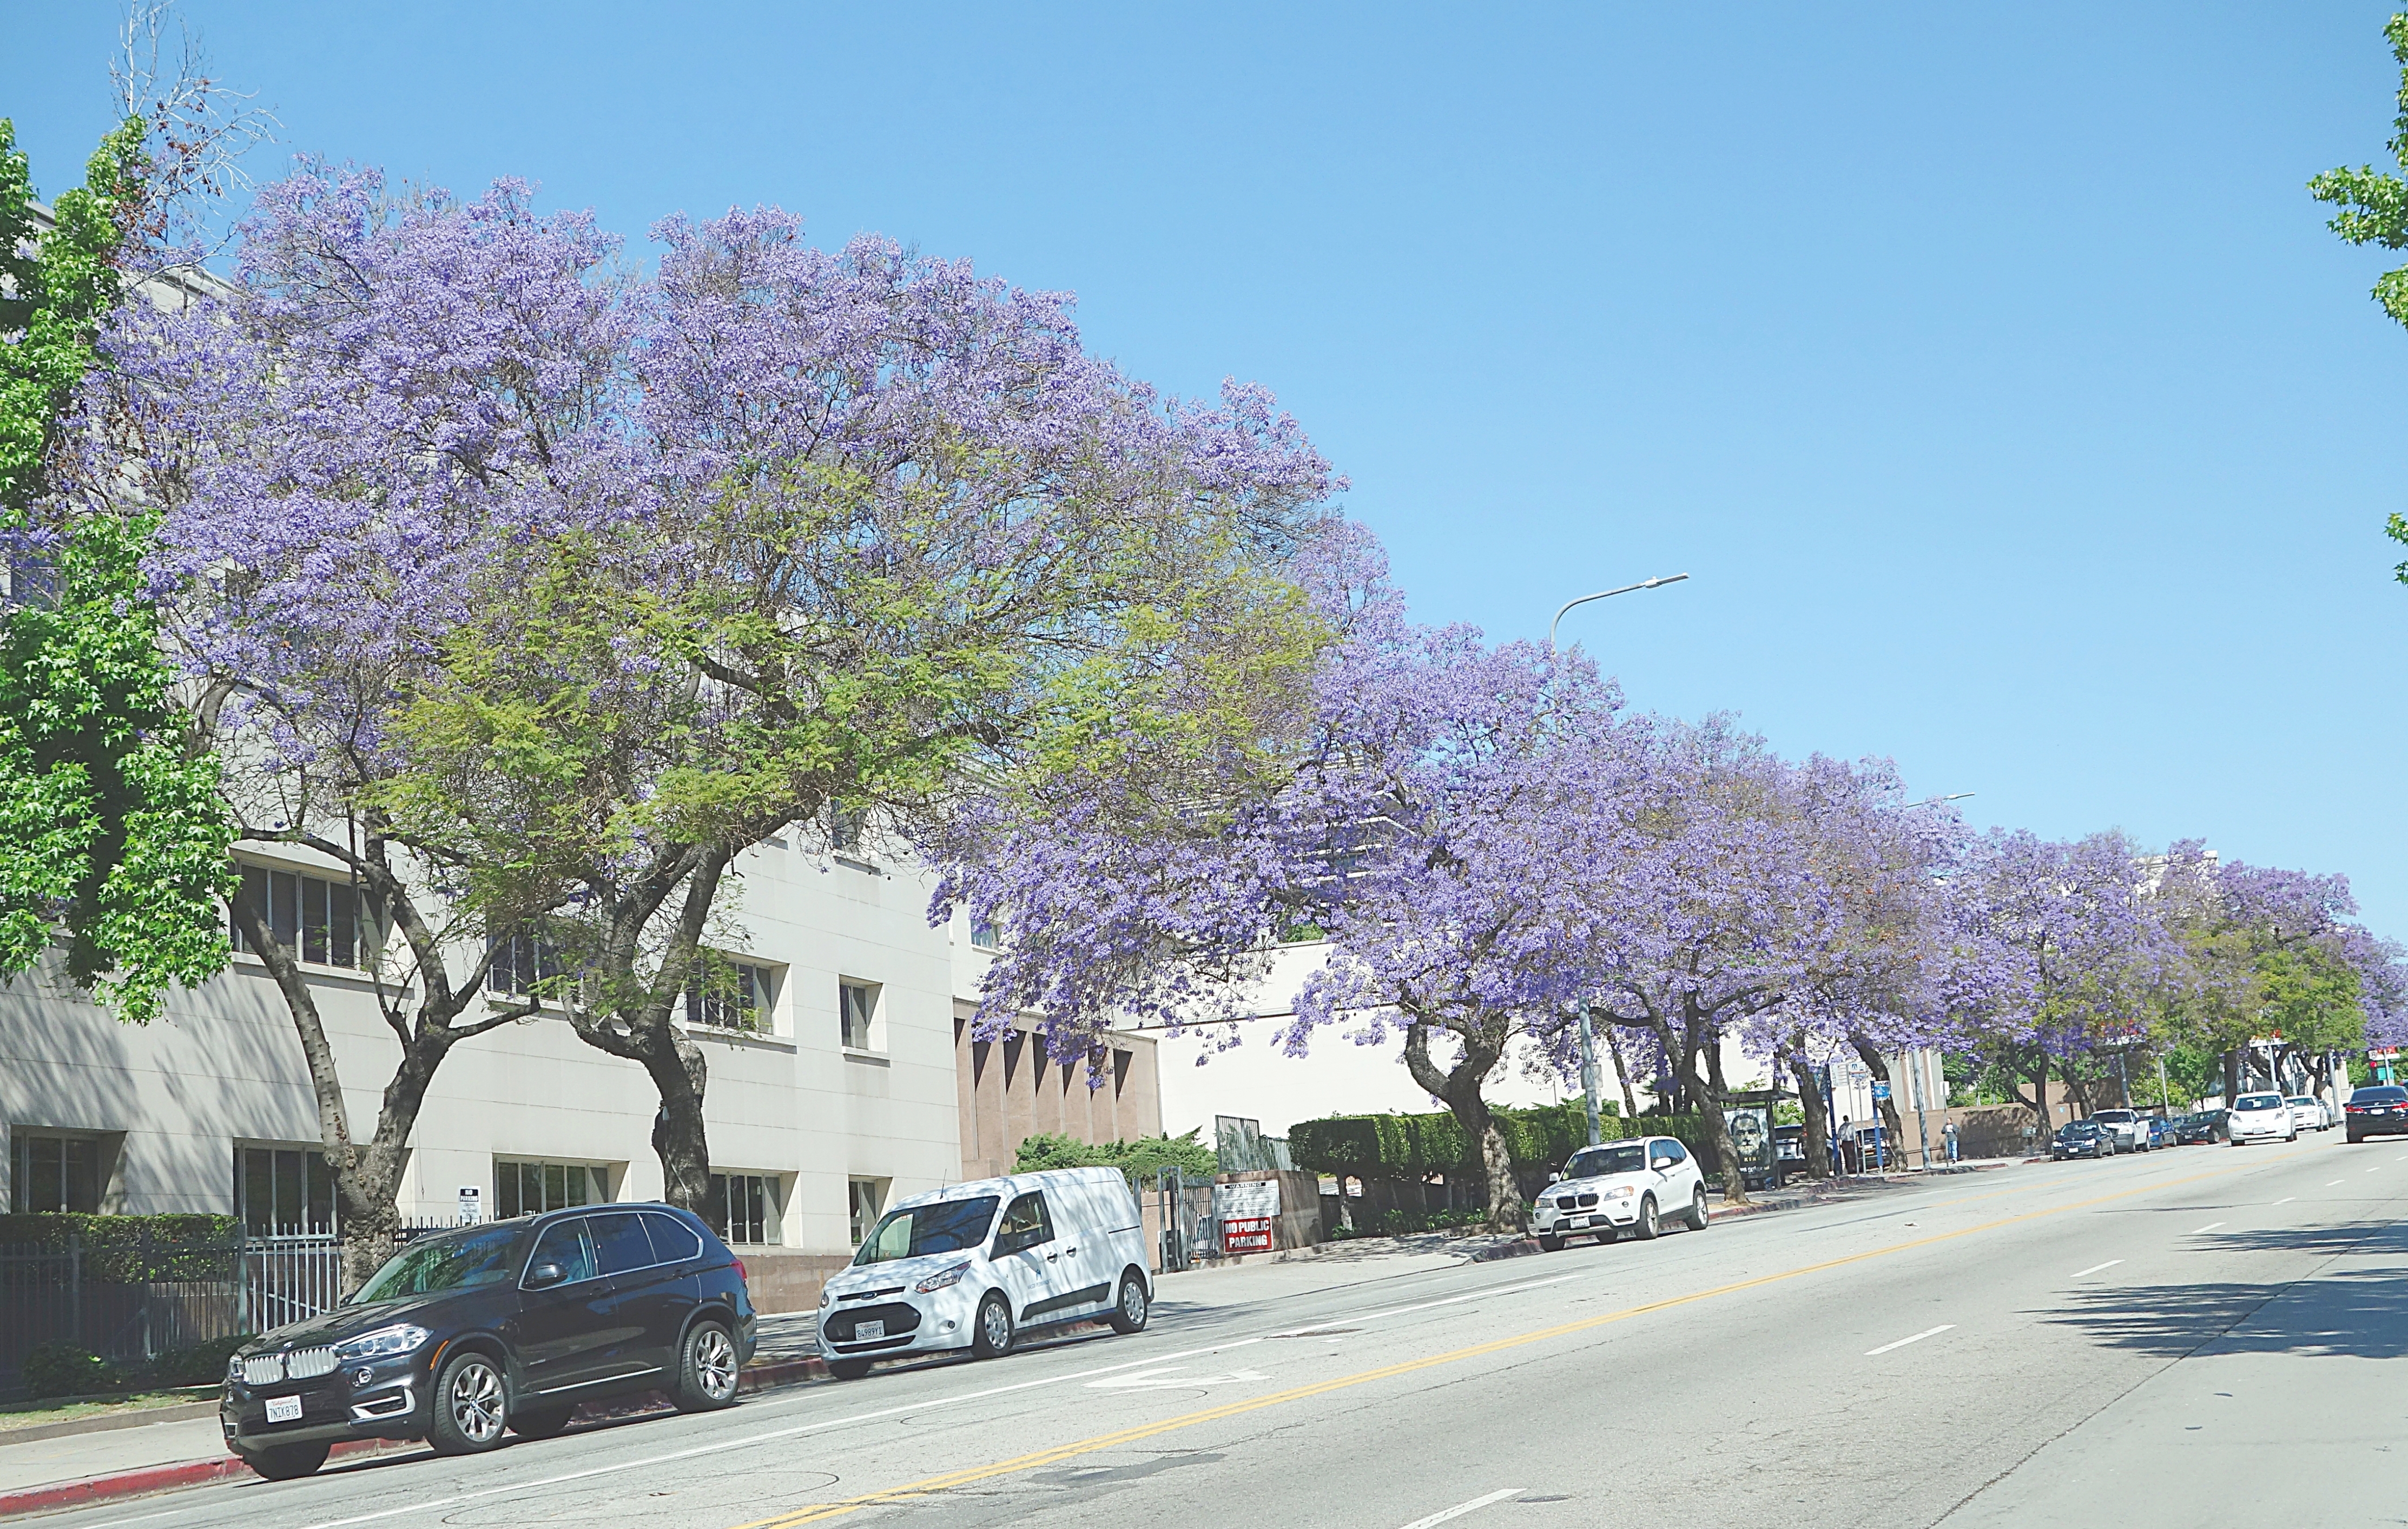 Улица с деревьями жакаранда в р-не Голливуд. Фото Морошкина В.В.